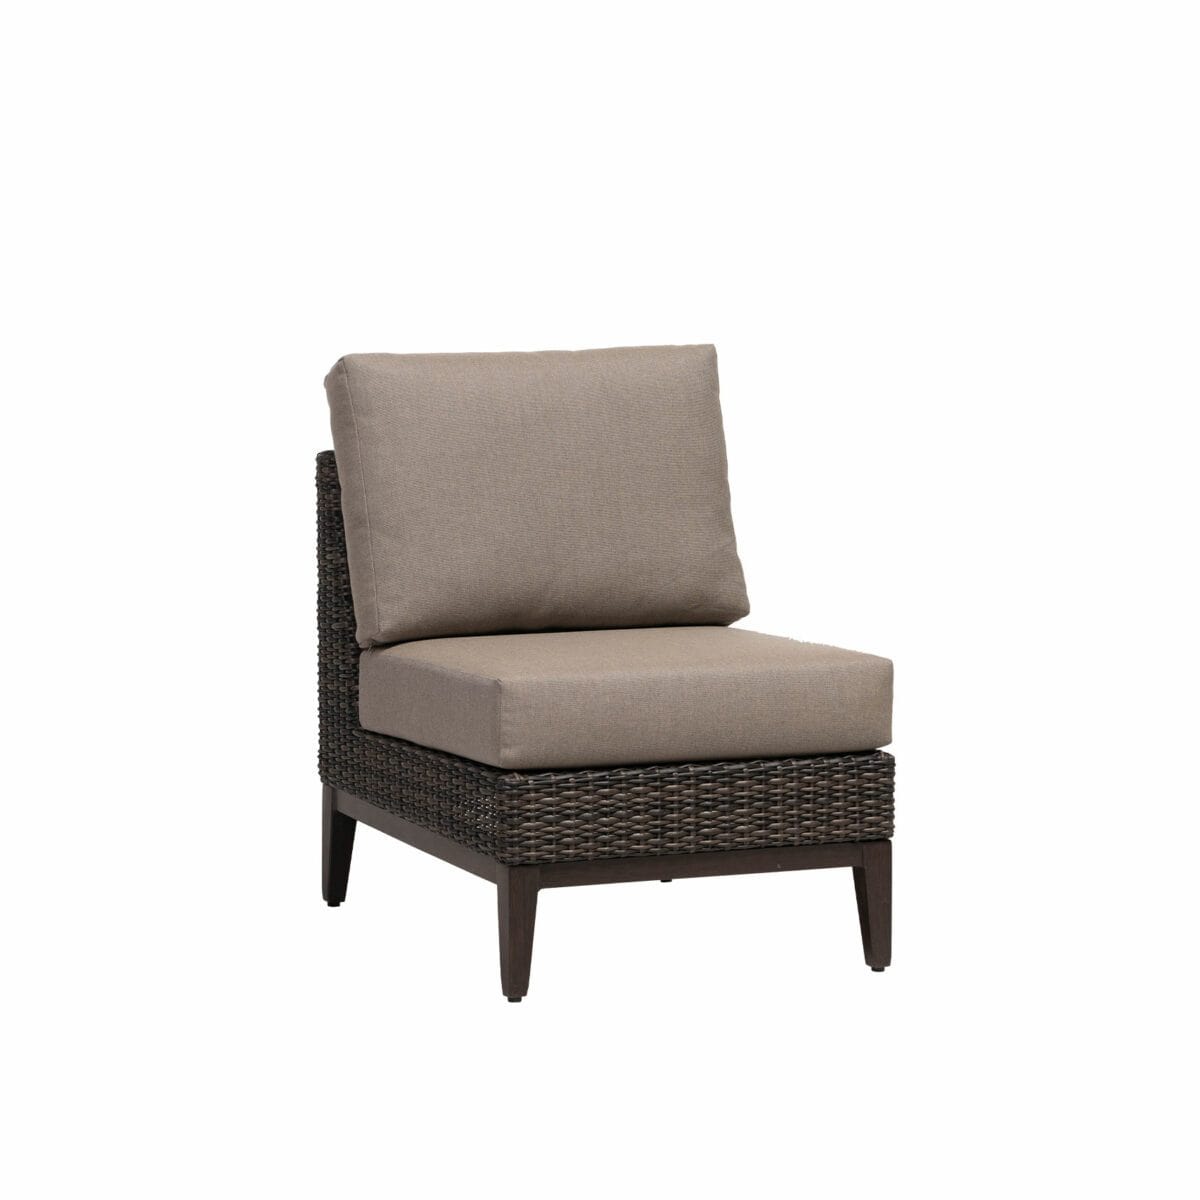 Ratana Furniture - Sectional Santa Cruz Chair w/o Arm